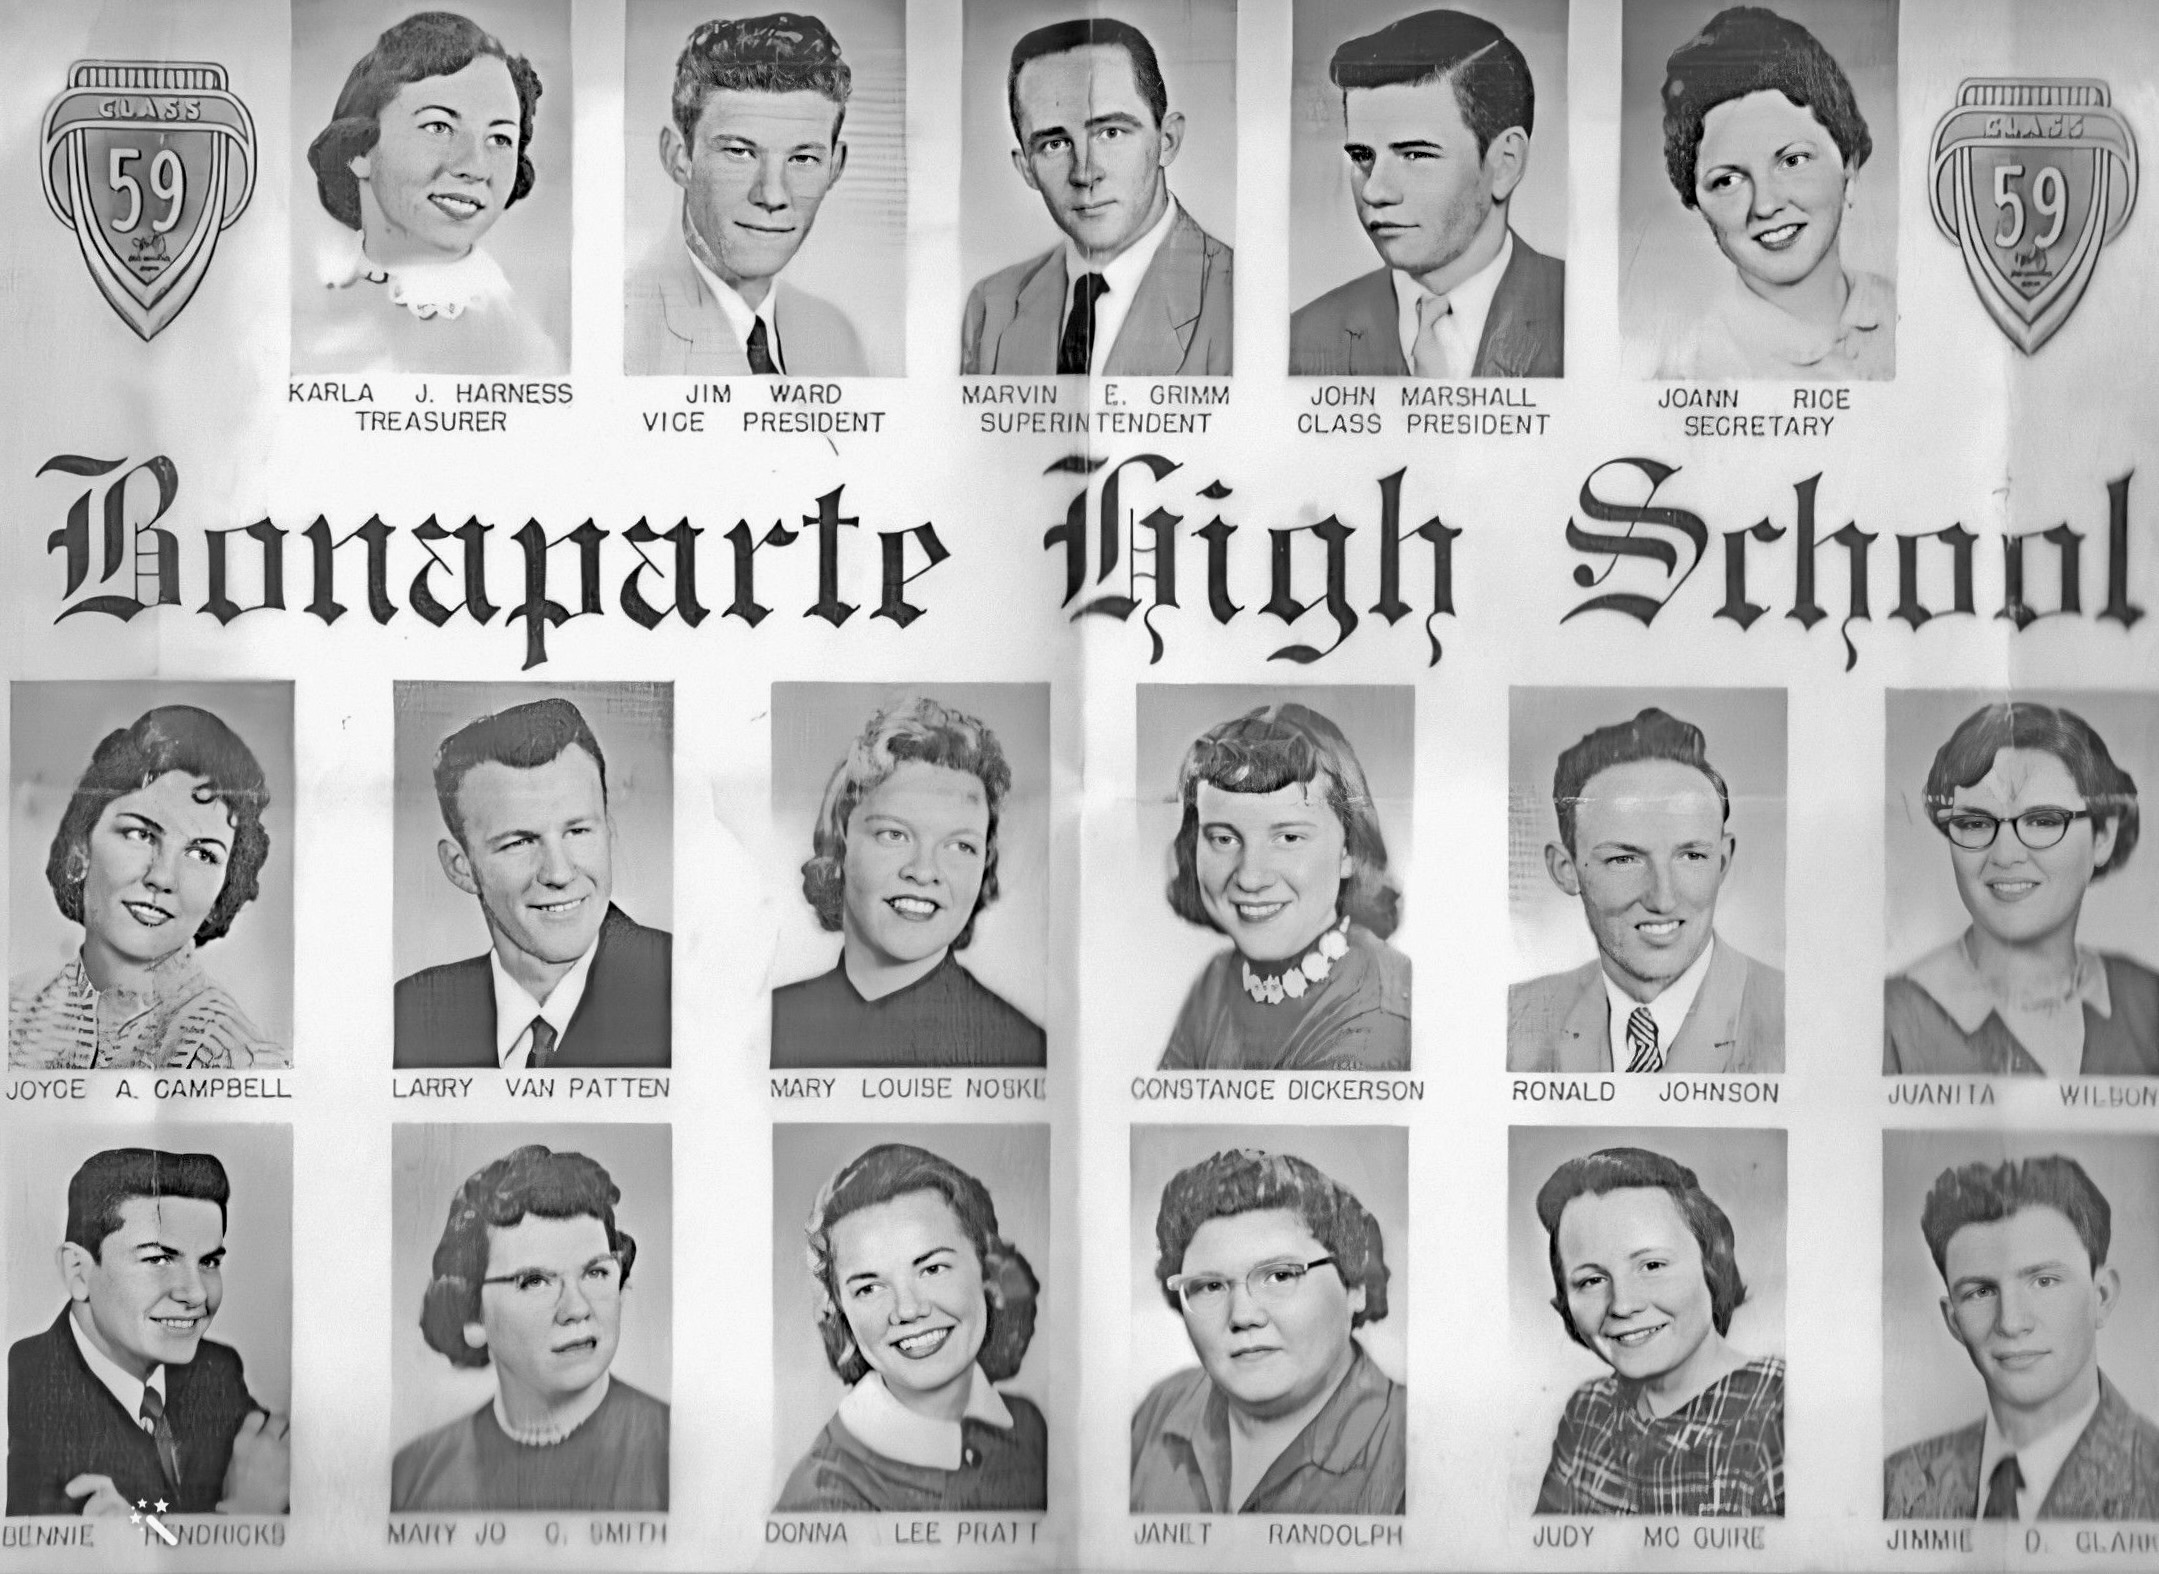 Bonaparte High School Class of 1959